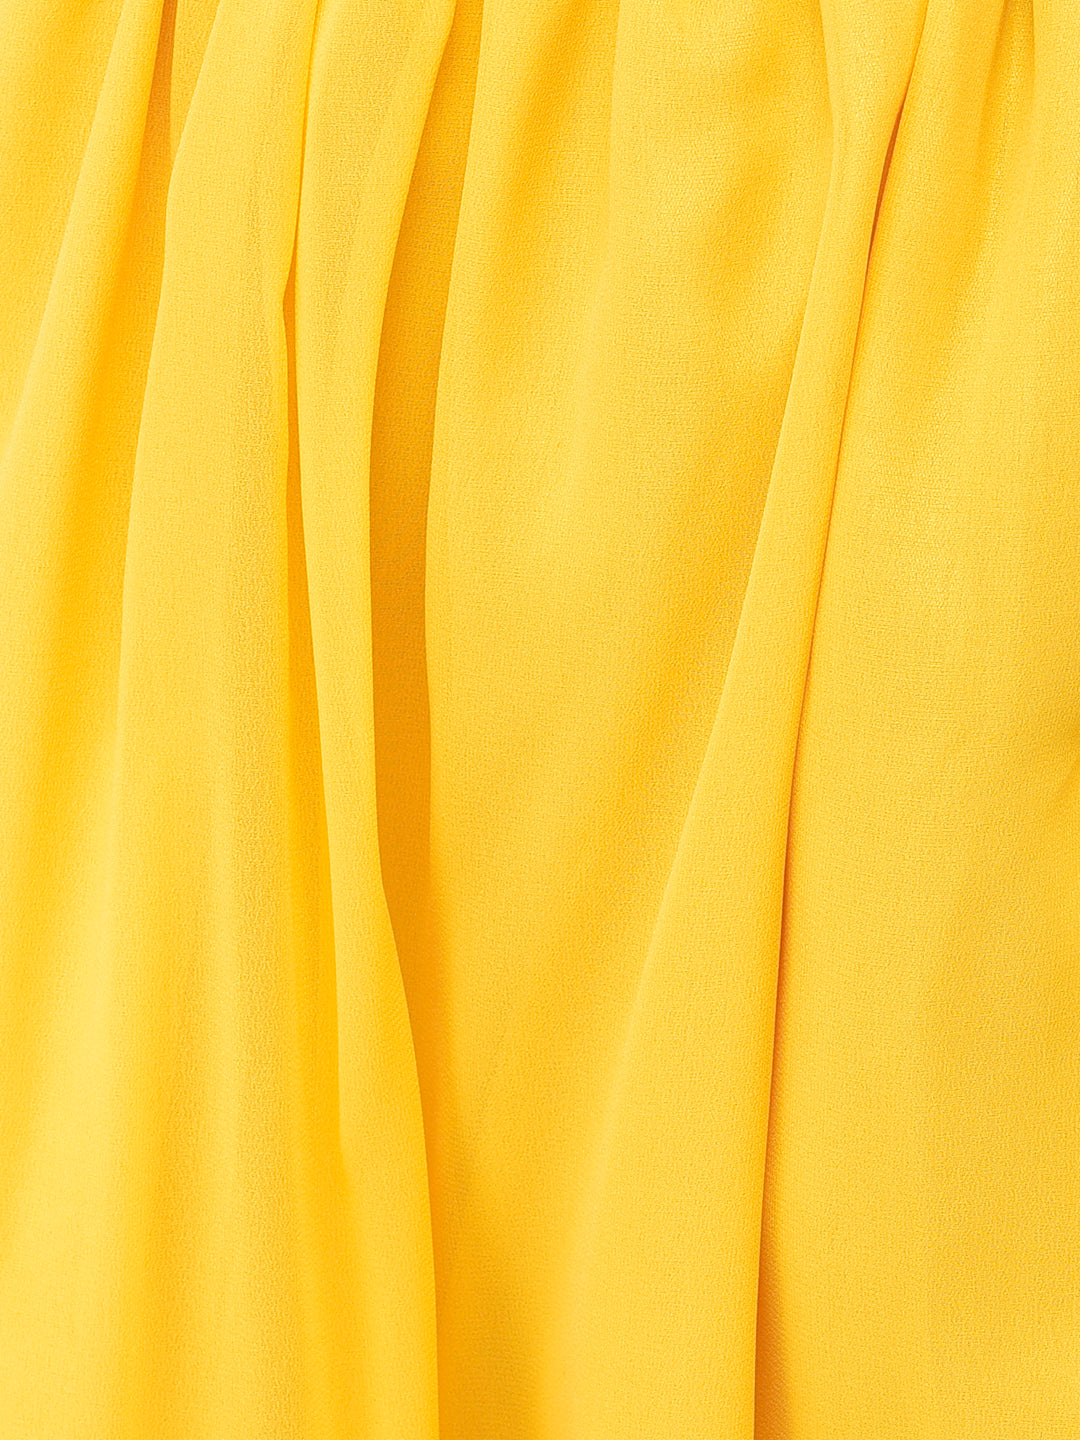 Neerus'S yellow color, georgette fabric suit-plazzo